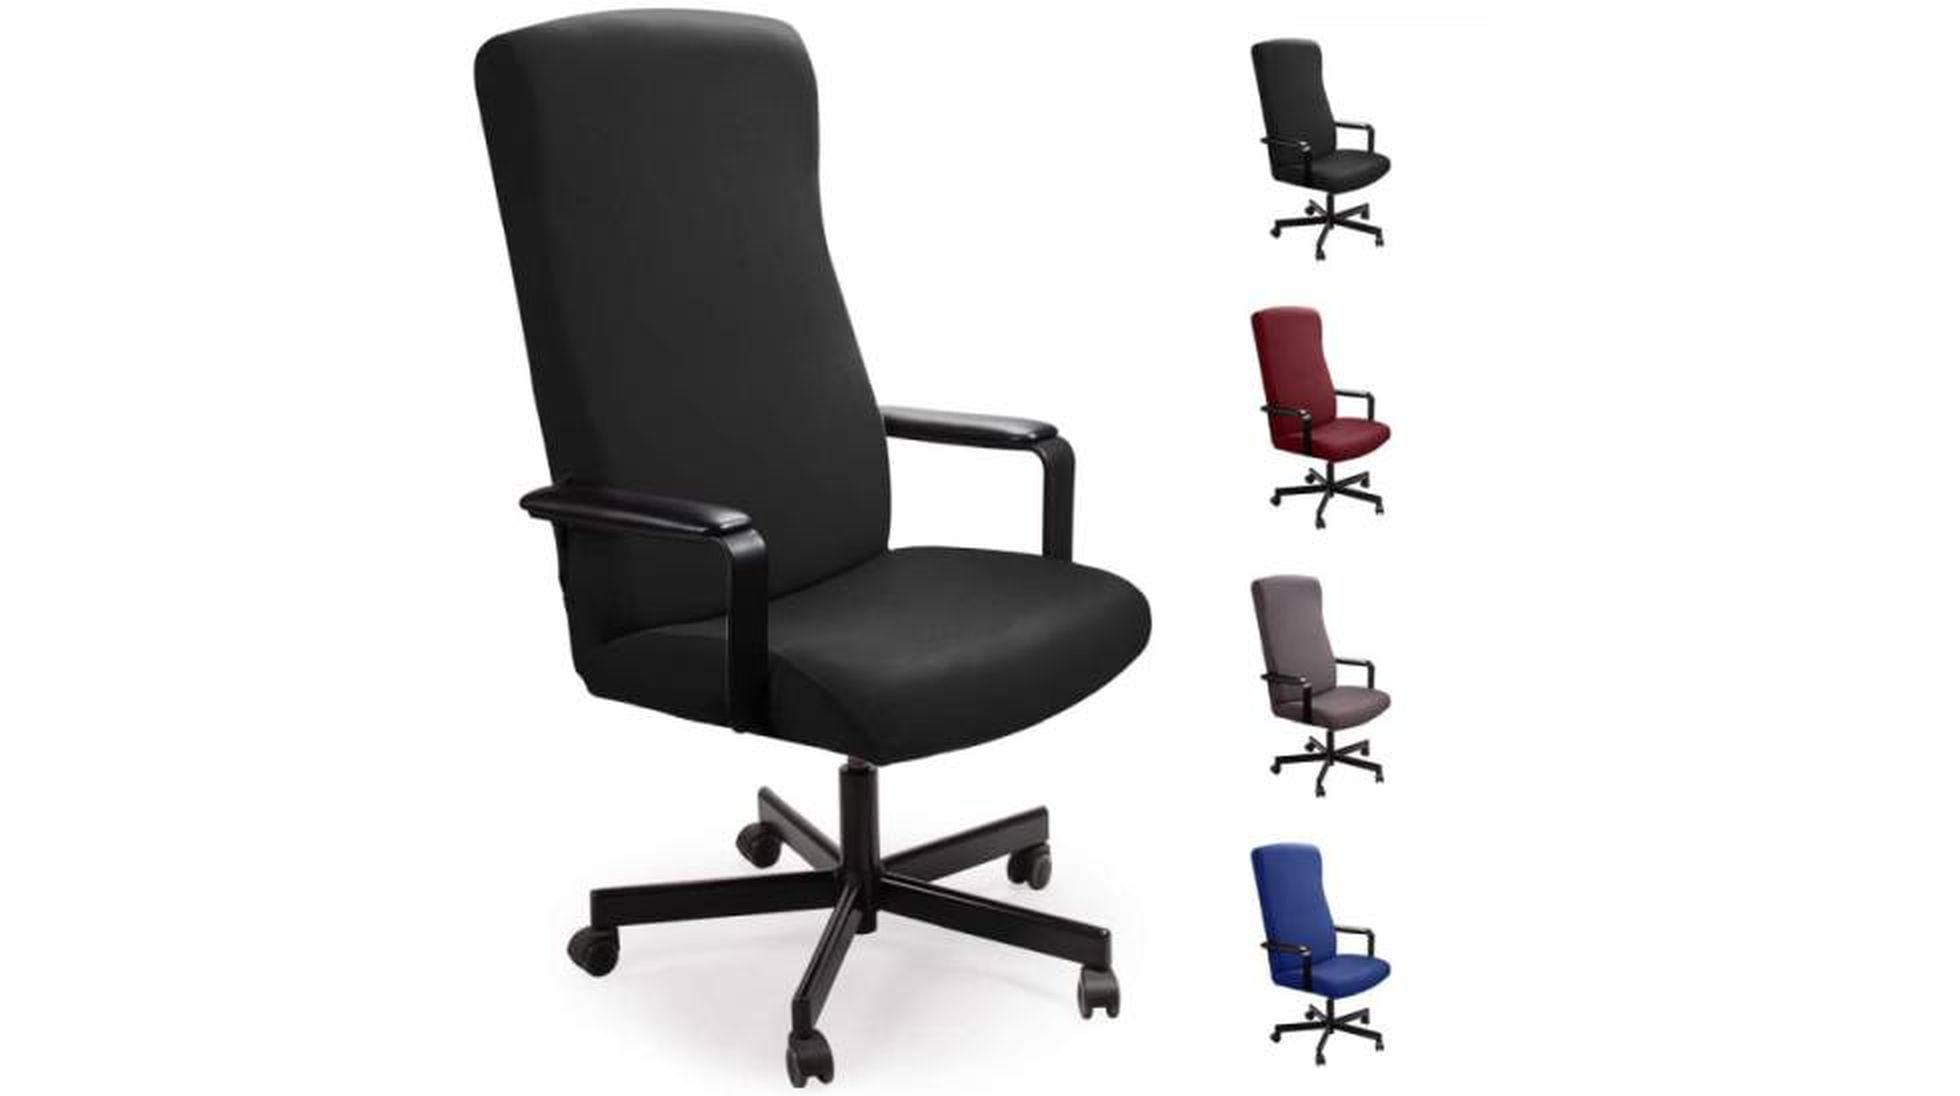 wonderfulwu Fundas elásticas para silla de oficina de Spandex funda para silla de ordenador extraíble lavable giratoria silla fundas protectoras 